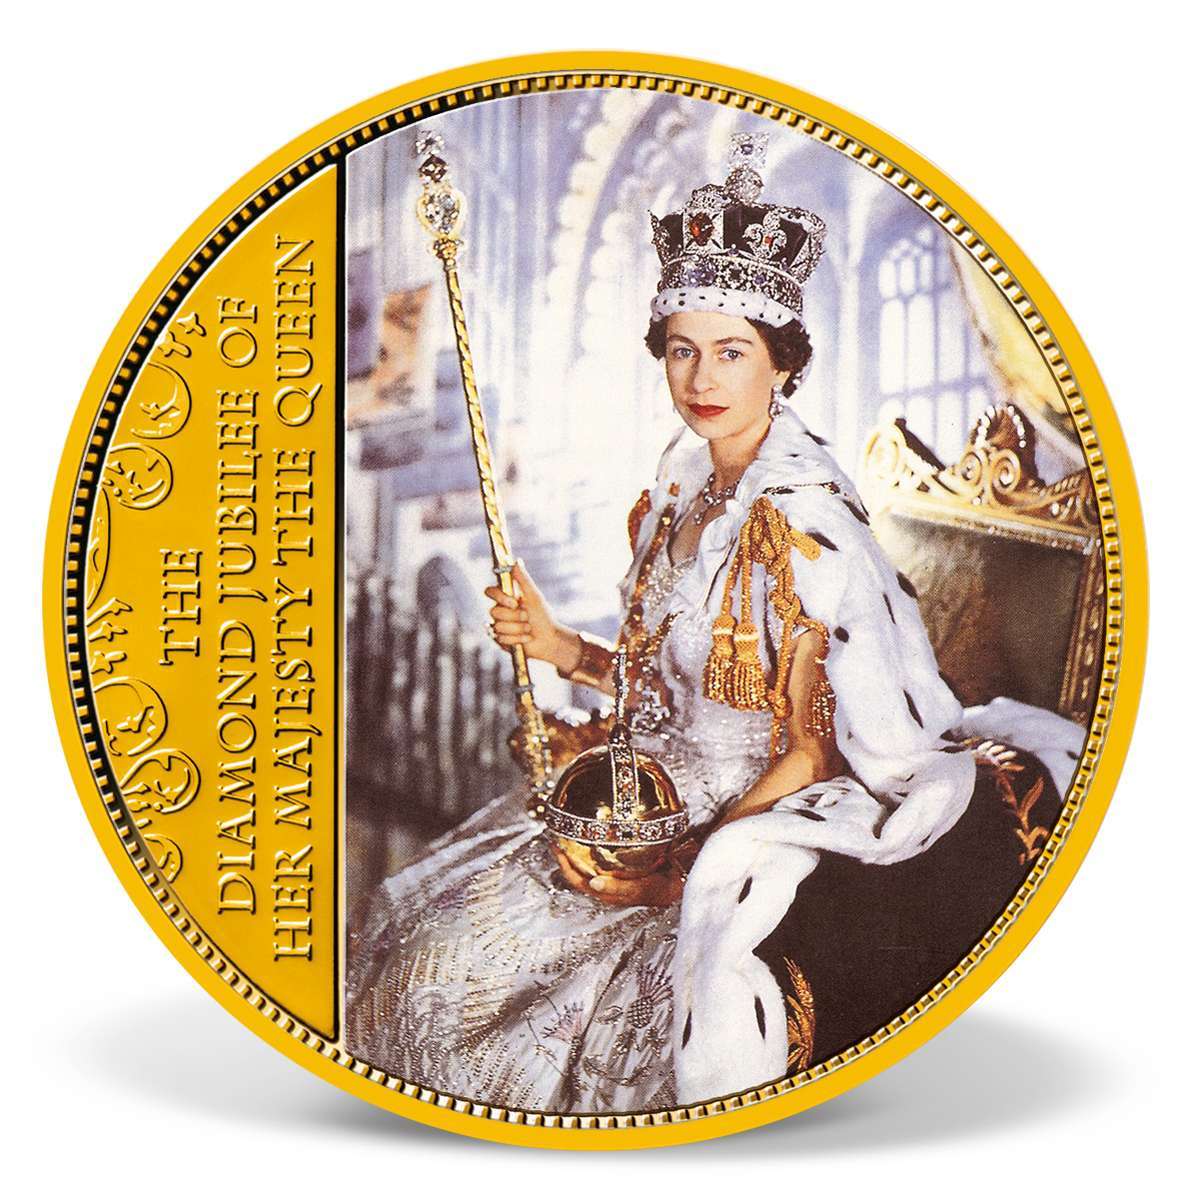 Queen Elizabeth II Diamond Jubilee Colossal Commemorative Coin Gold